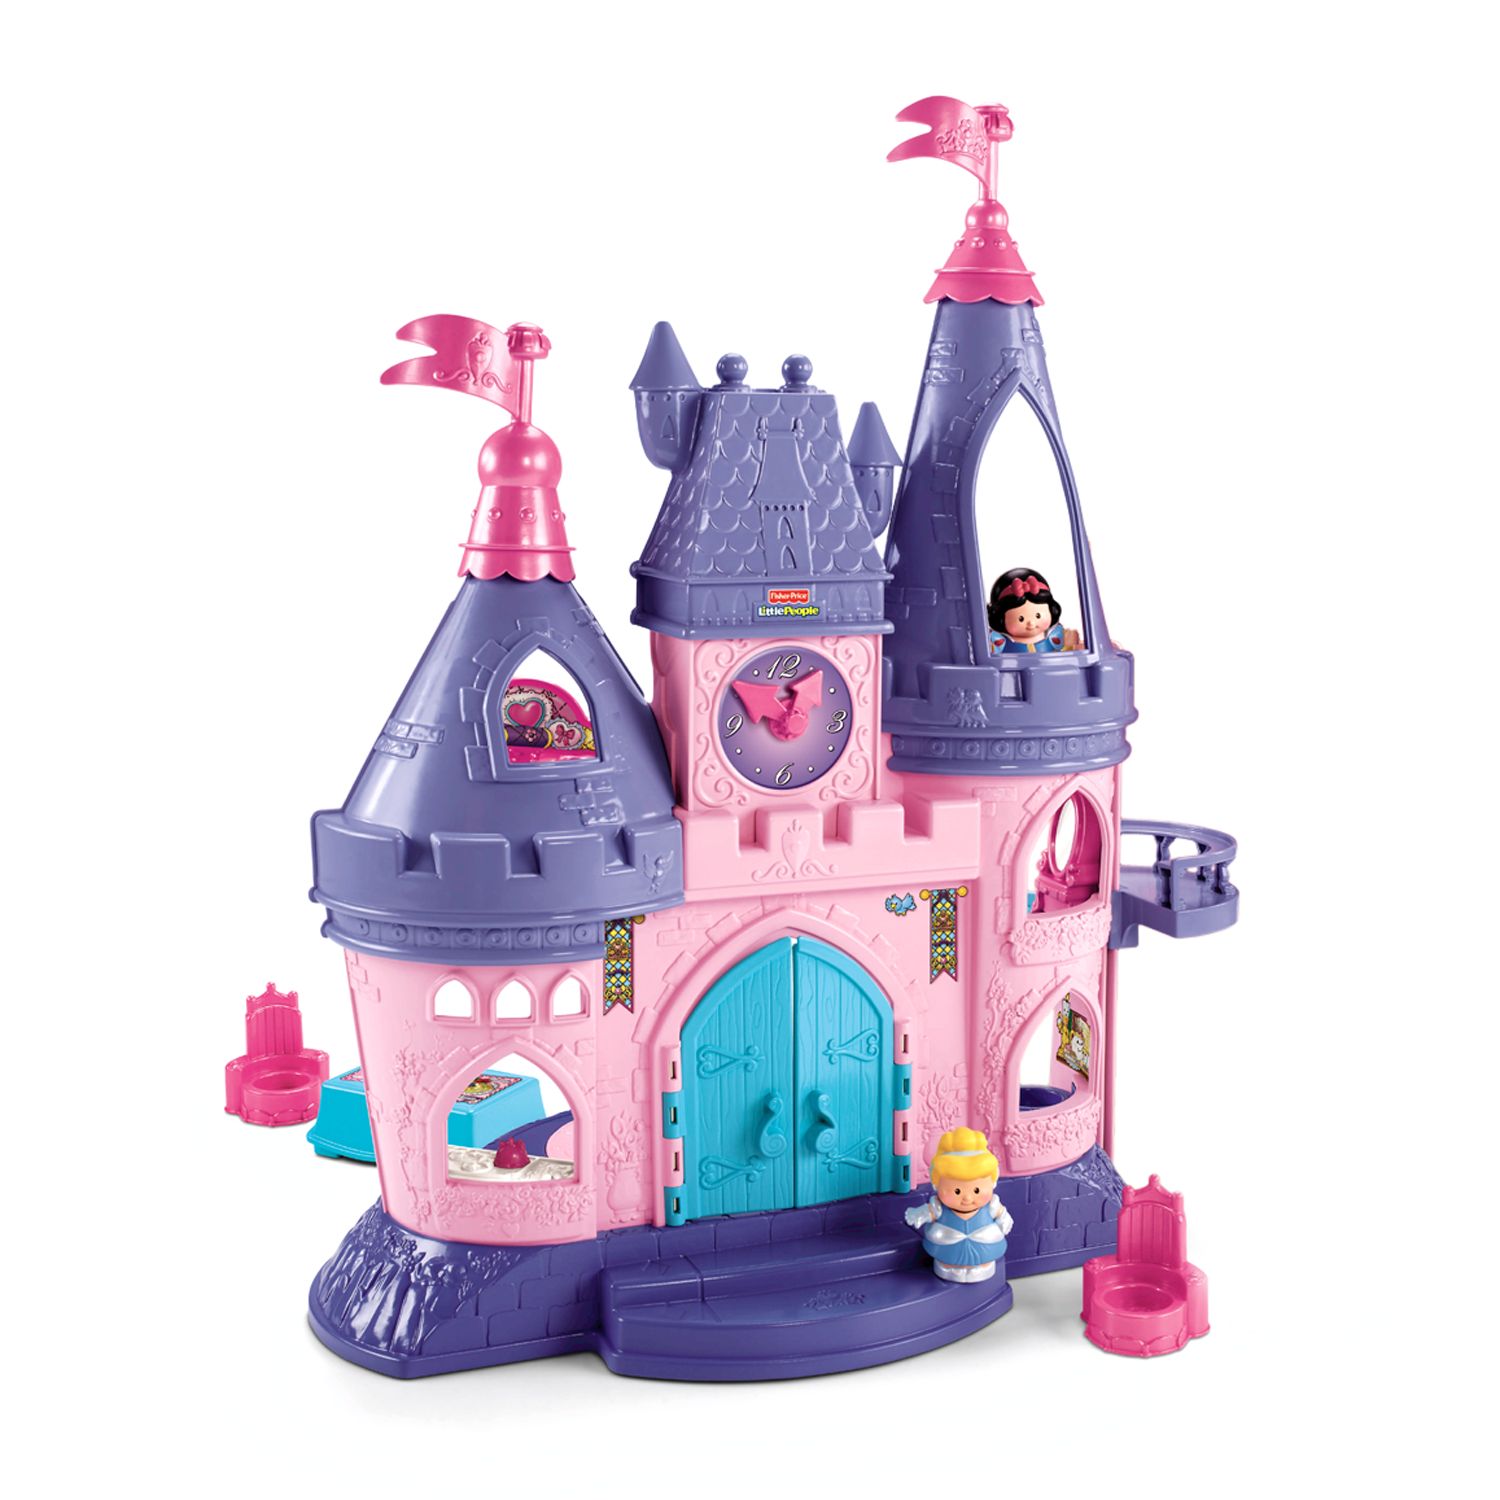 little people princess castle